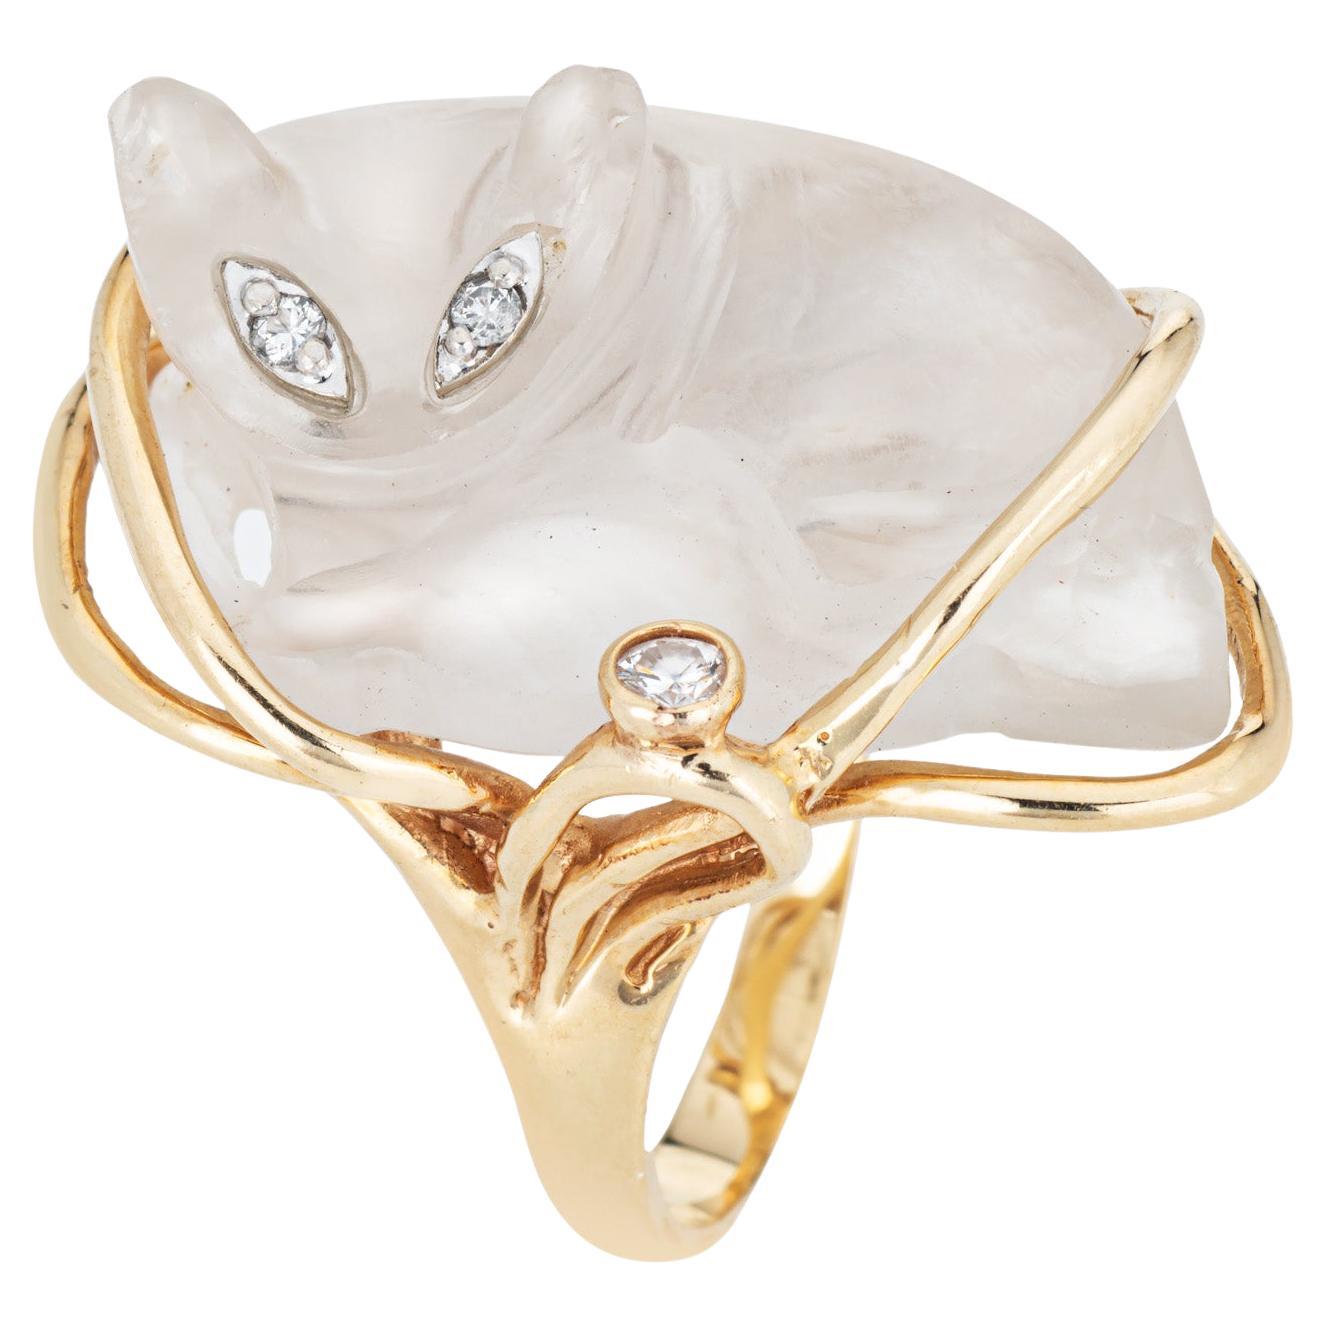 Vintage 70s Cat Ring Rock Crystal Diamond Eyes 14k Yellow Gold Animal Jewelry